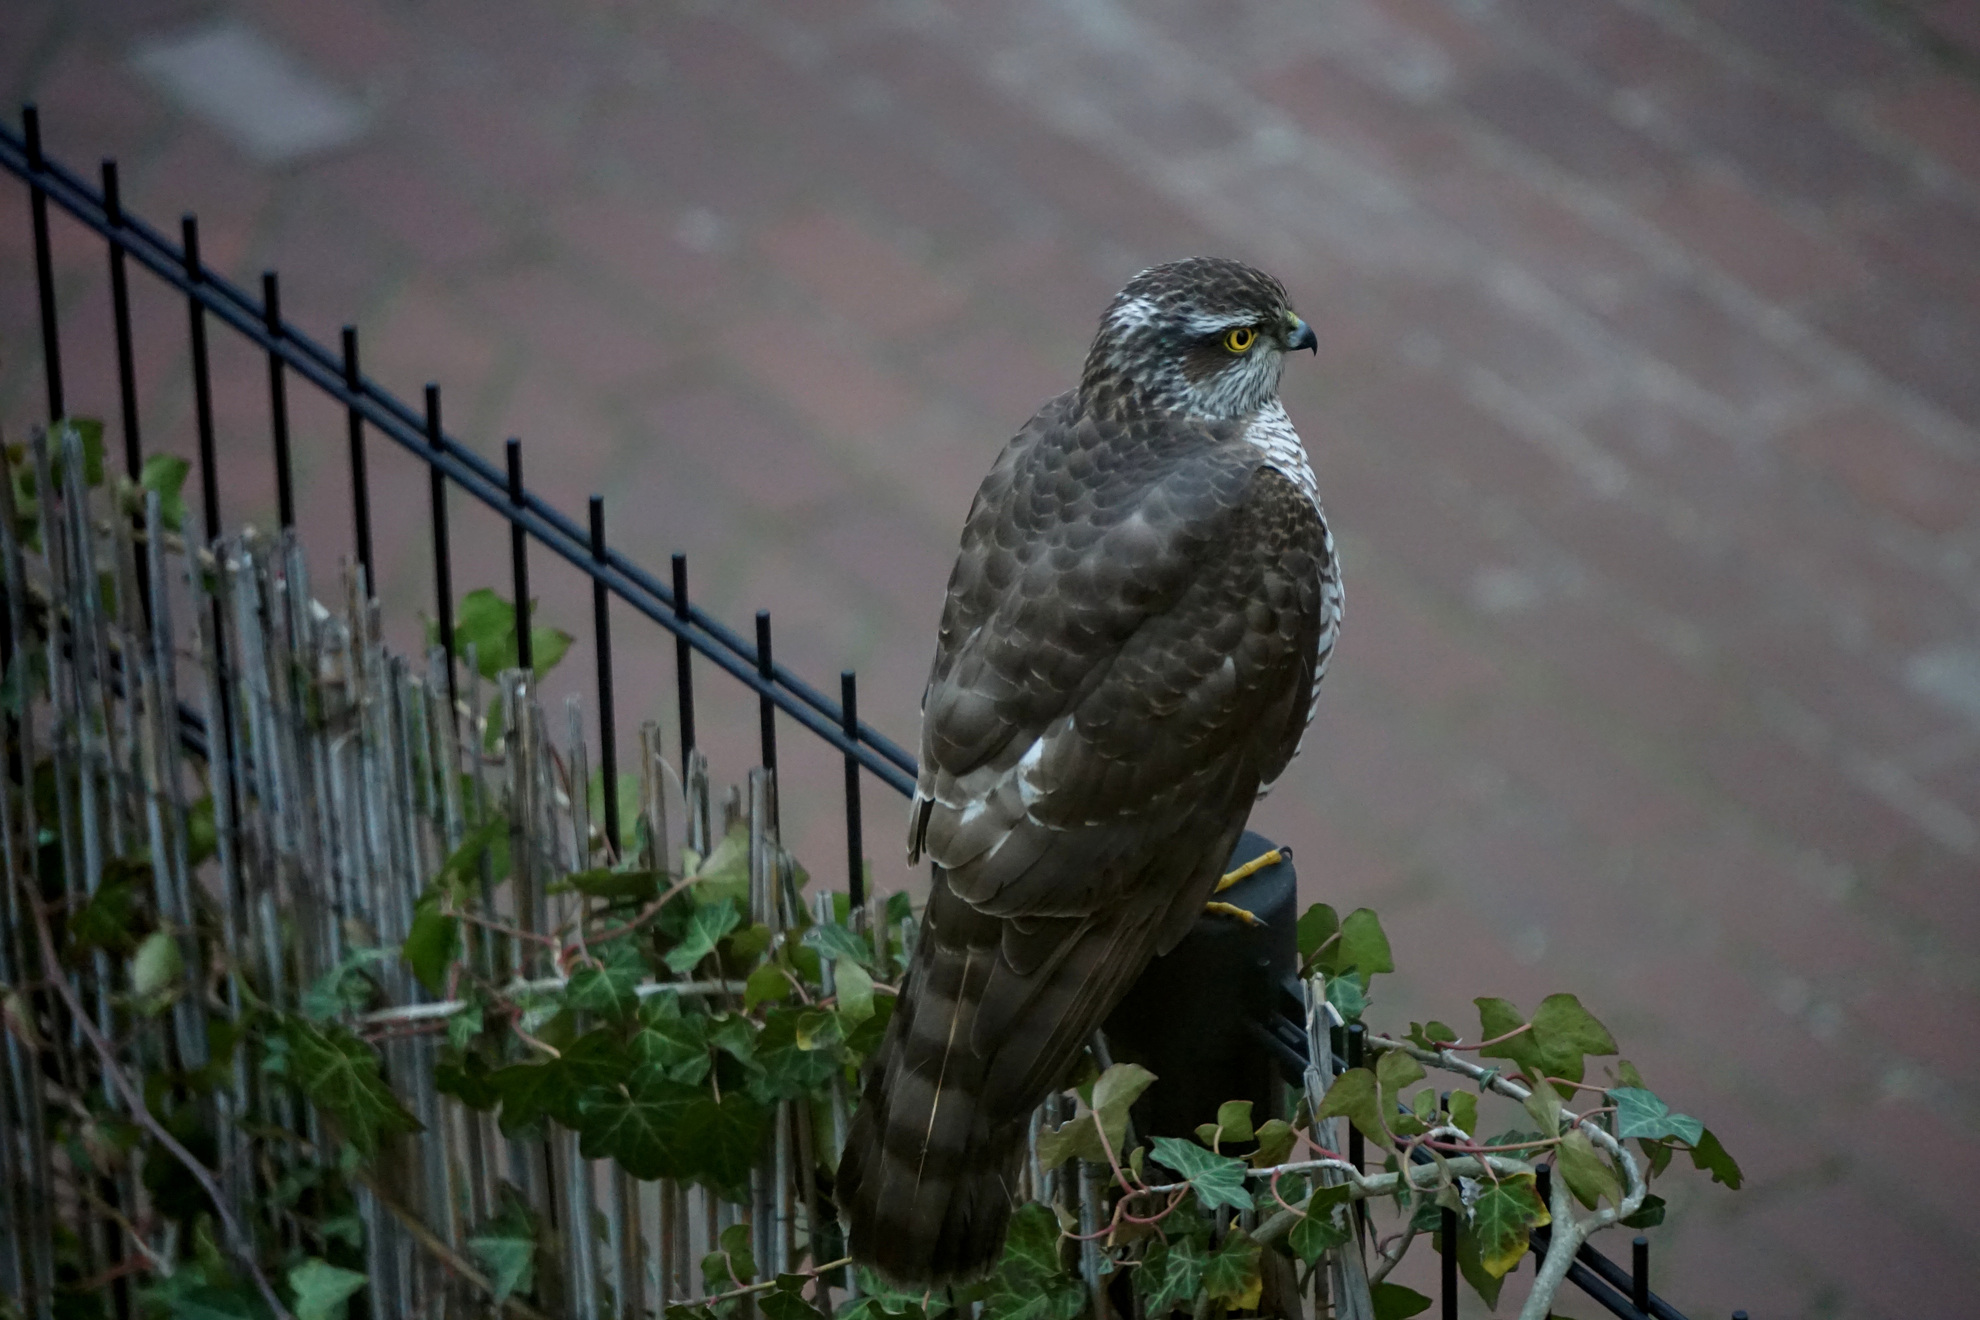 Sparrowhawk on iron fence, looking forward